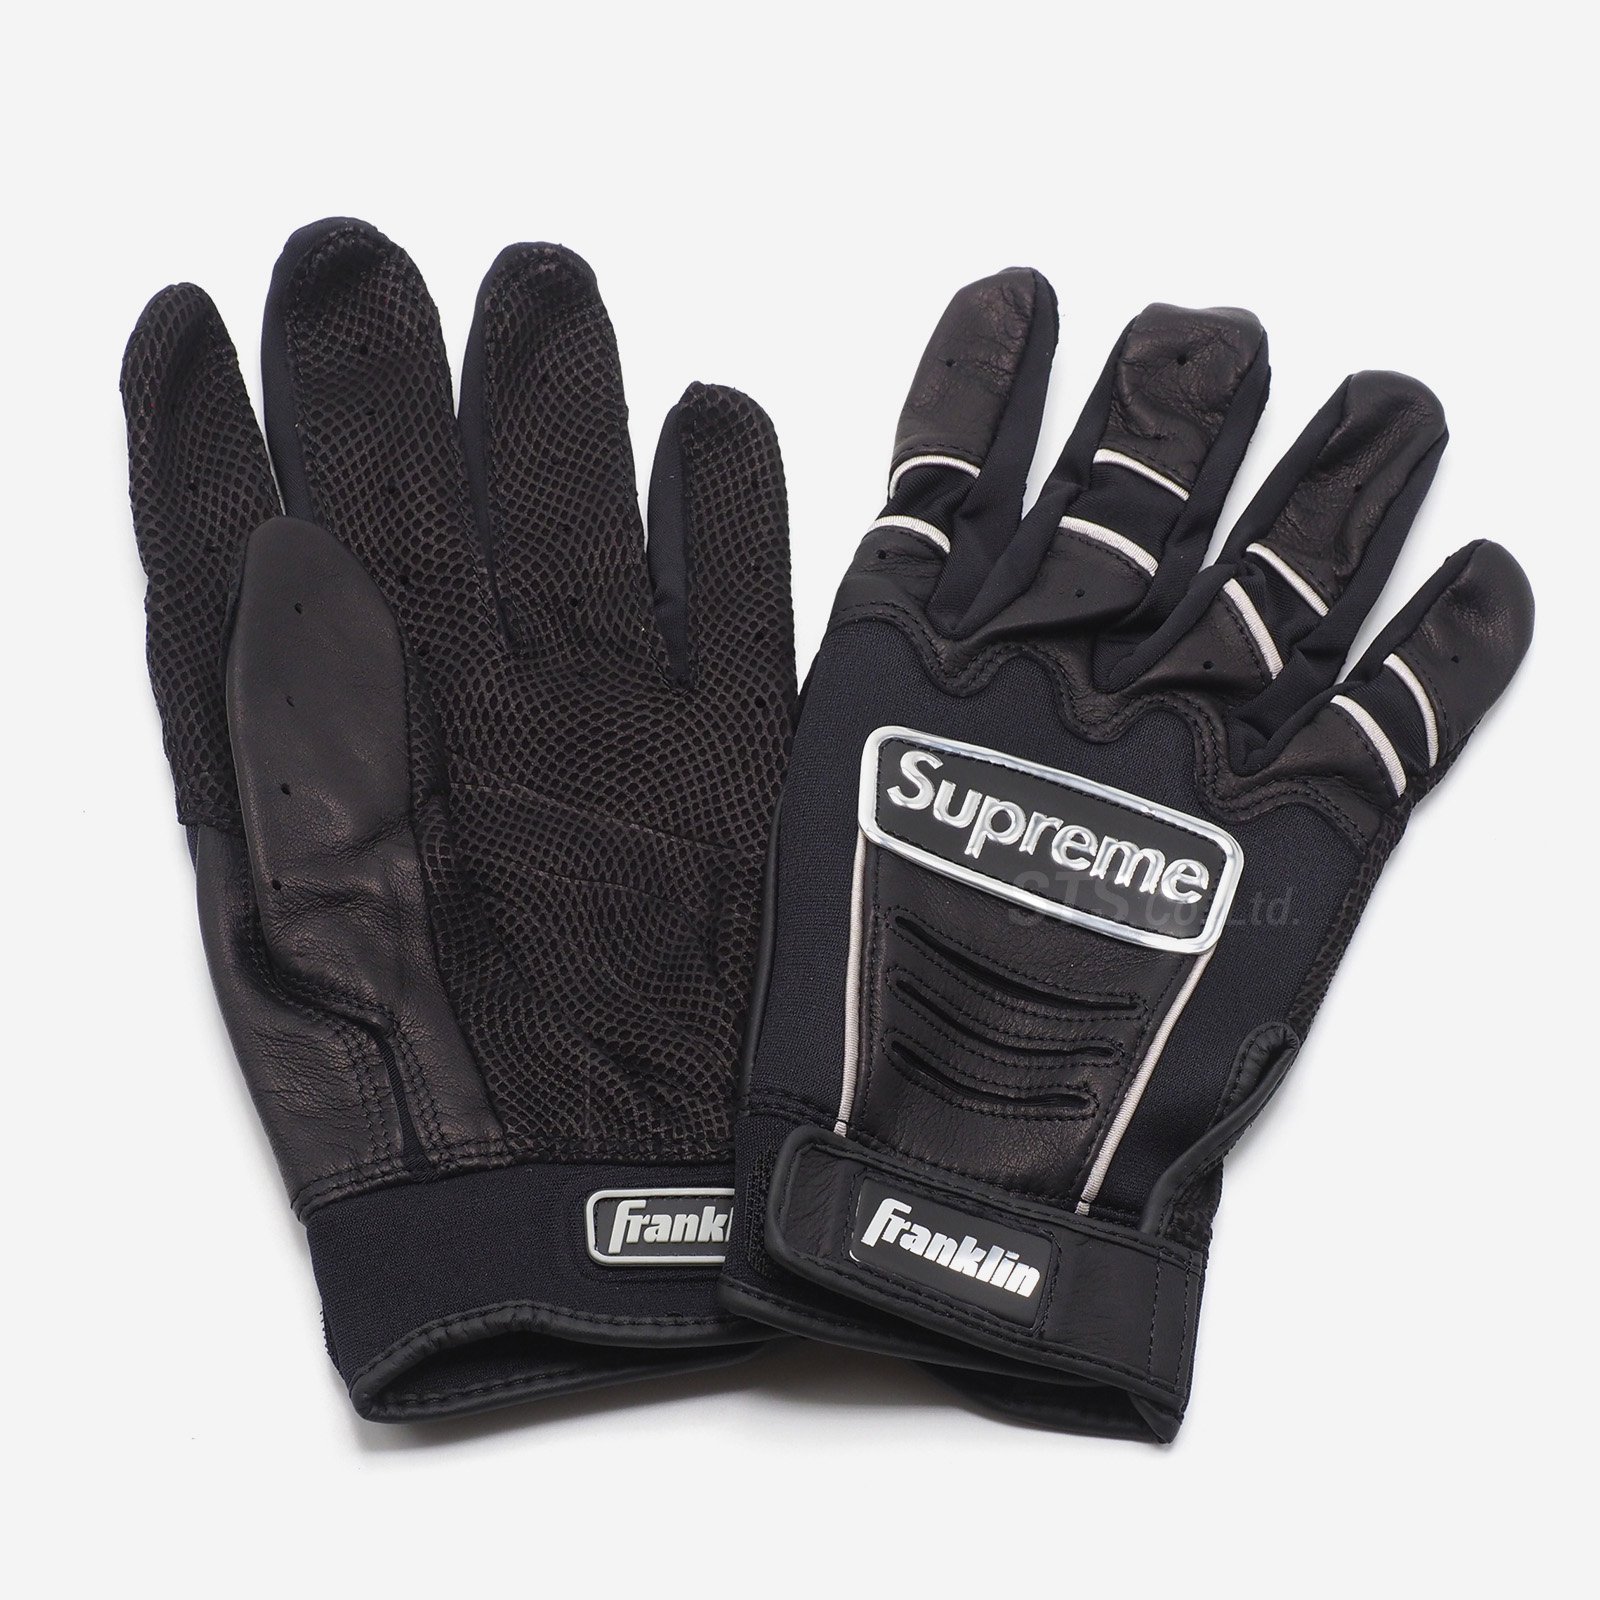 Supreme / Franklin CFX Pro Batting Glove - グローブ